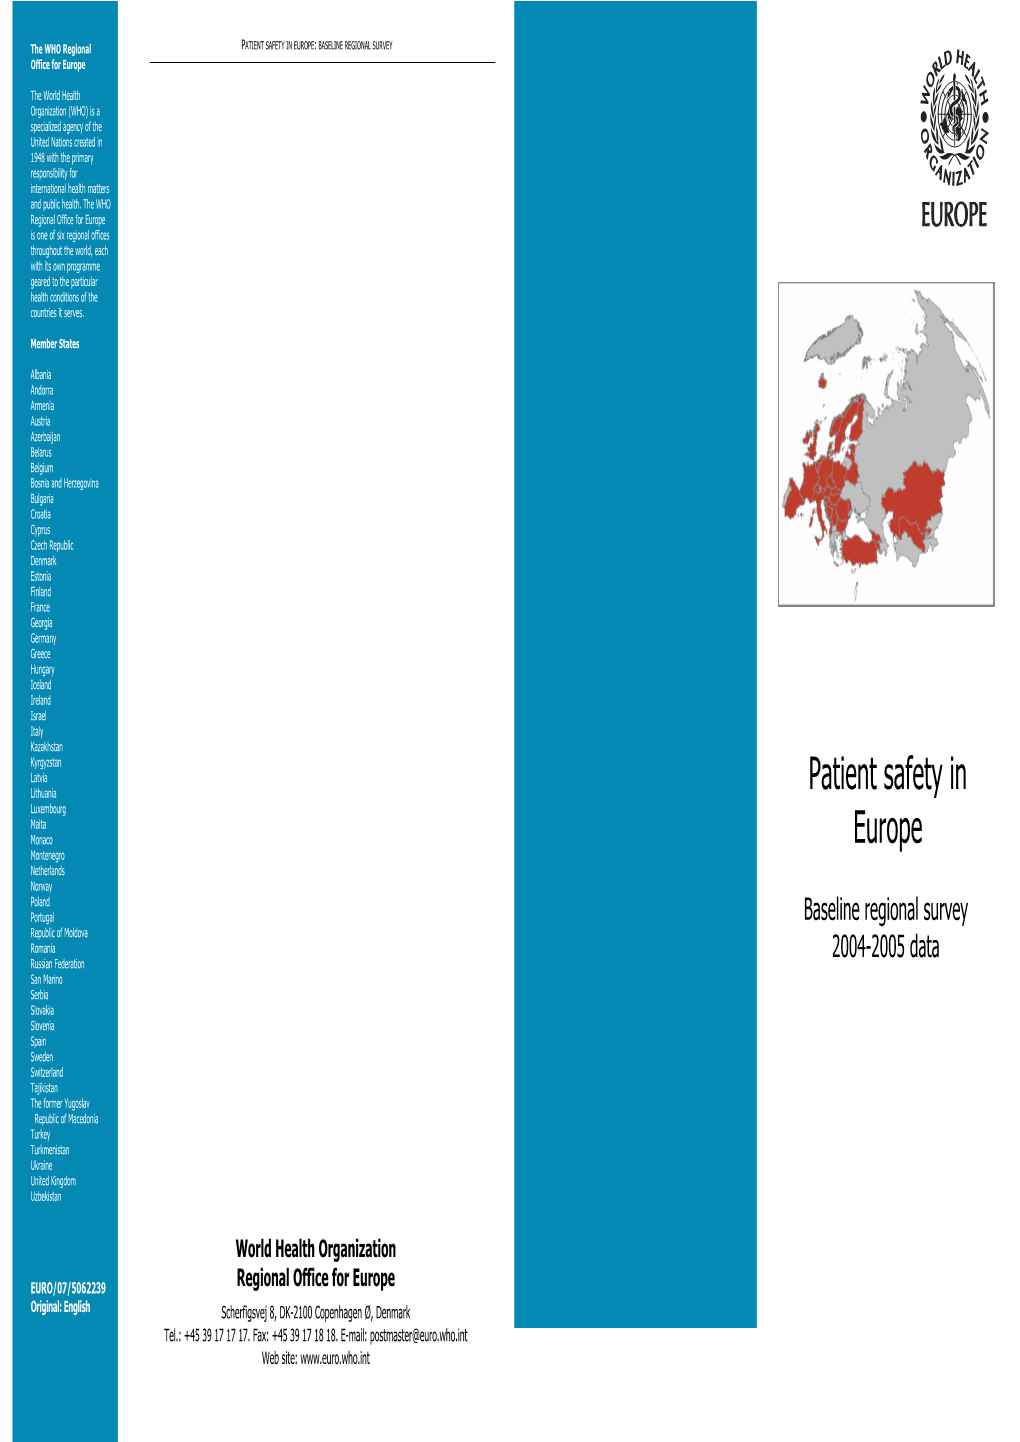 Patient Safety in Europe: Baseline Regional Survey, 2004-2005 Data